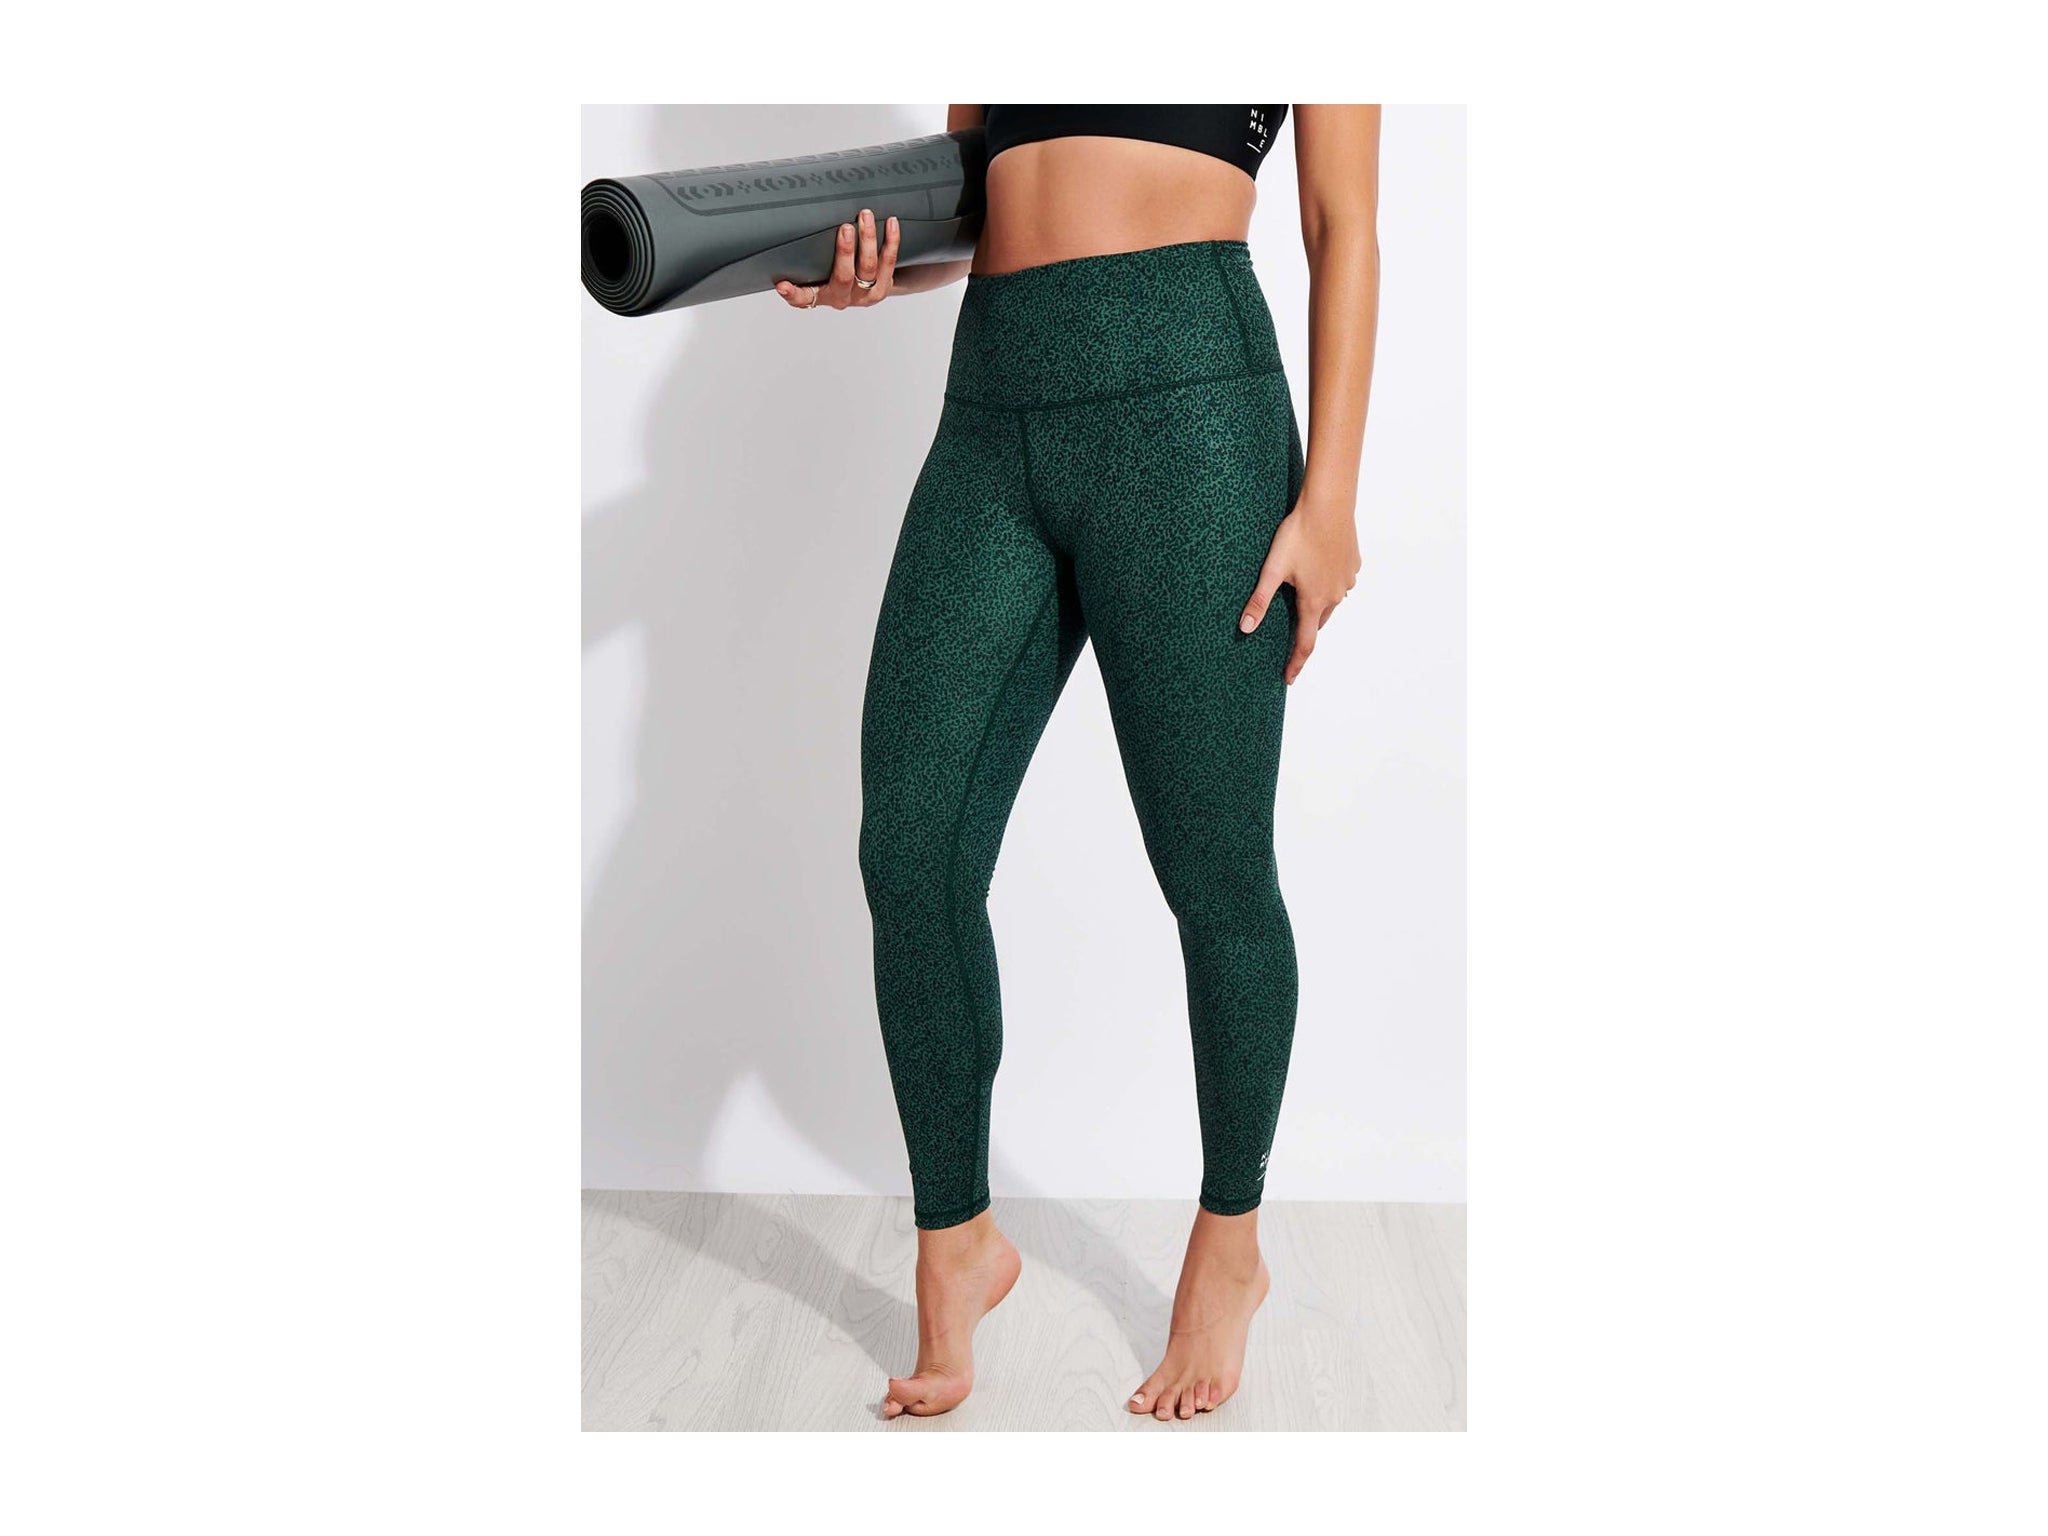 UK Womens High Waist Print Gym Leggings Fitness Trousers Sportswear Yoga Pants